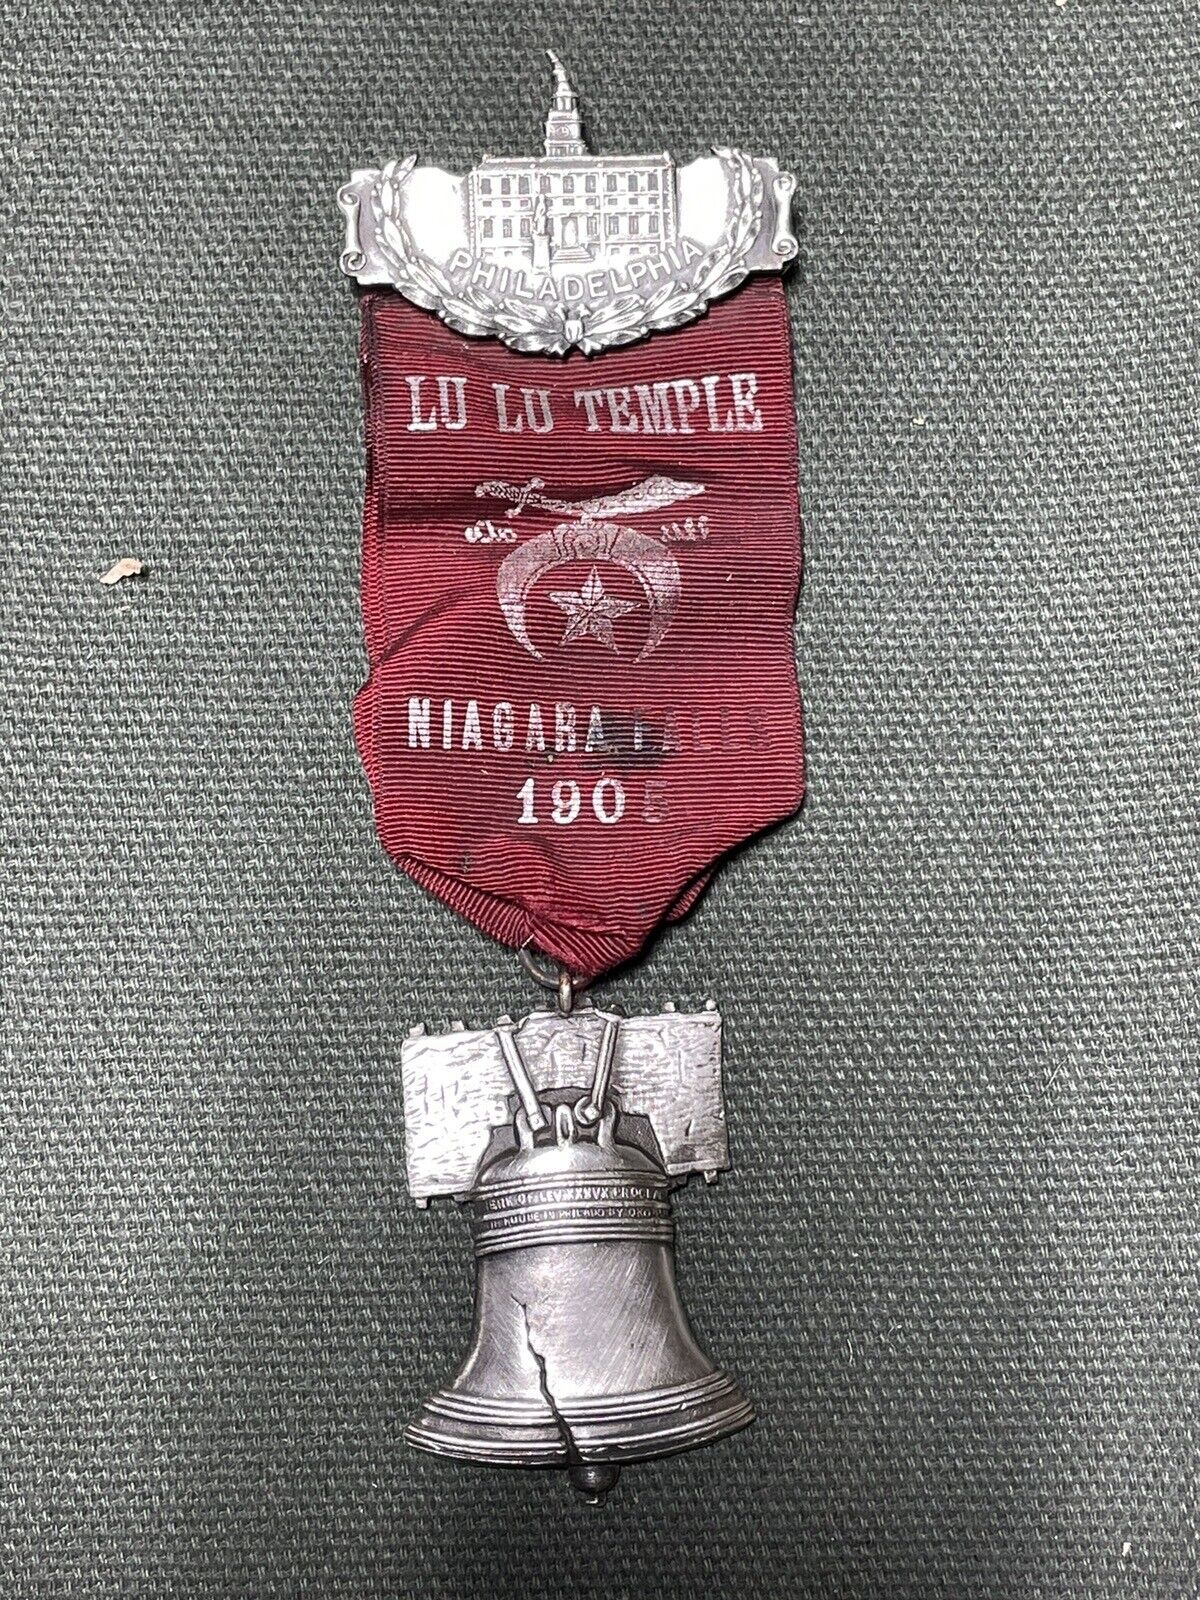 Vintage Philadelphia Lu Lu Temple Shriners badge 1906 Niagara Falls Masonic Bell